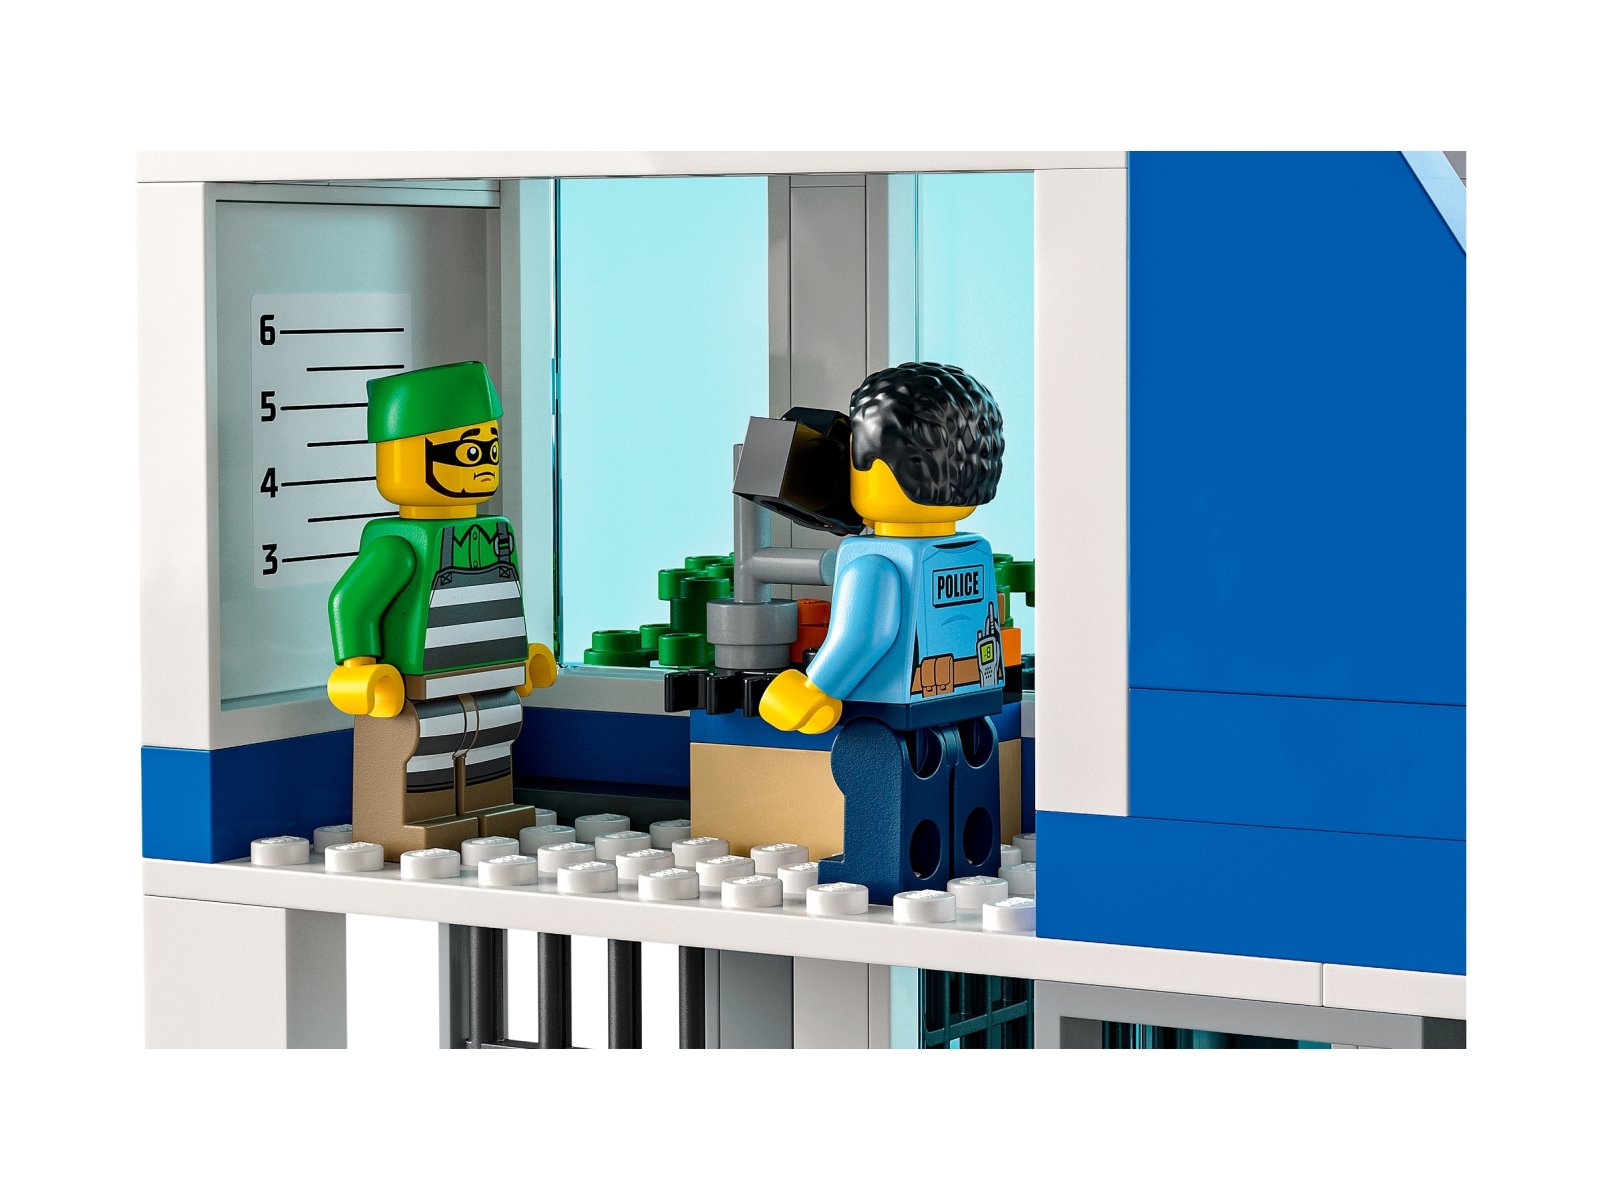 LEGO 60316 City Posterunek policji